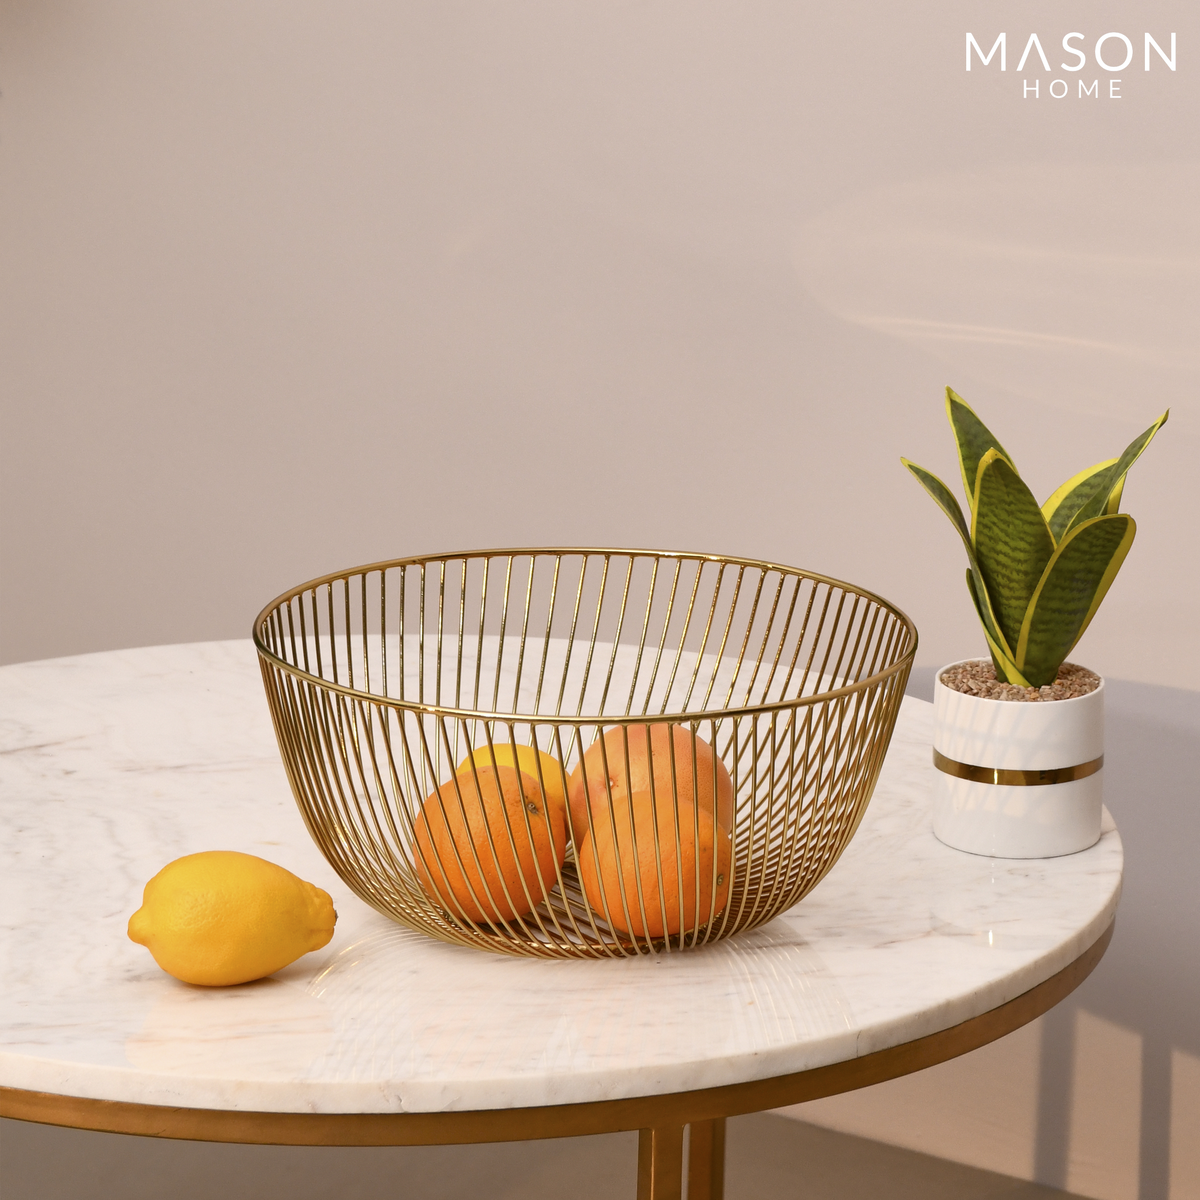 Mason Home by Amarsons - Lifestyle & Decor